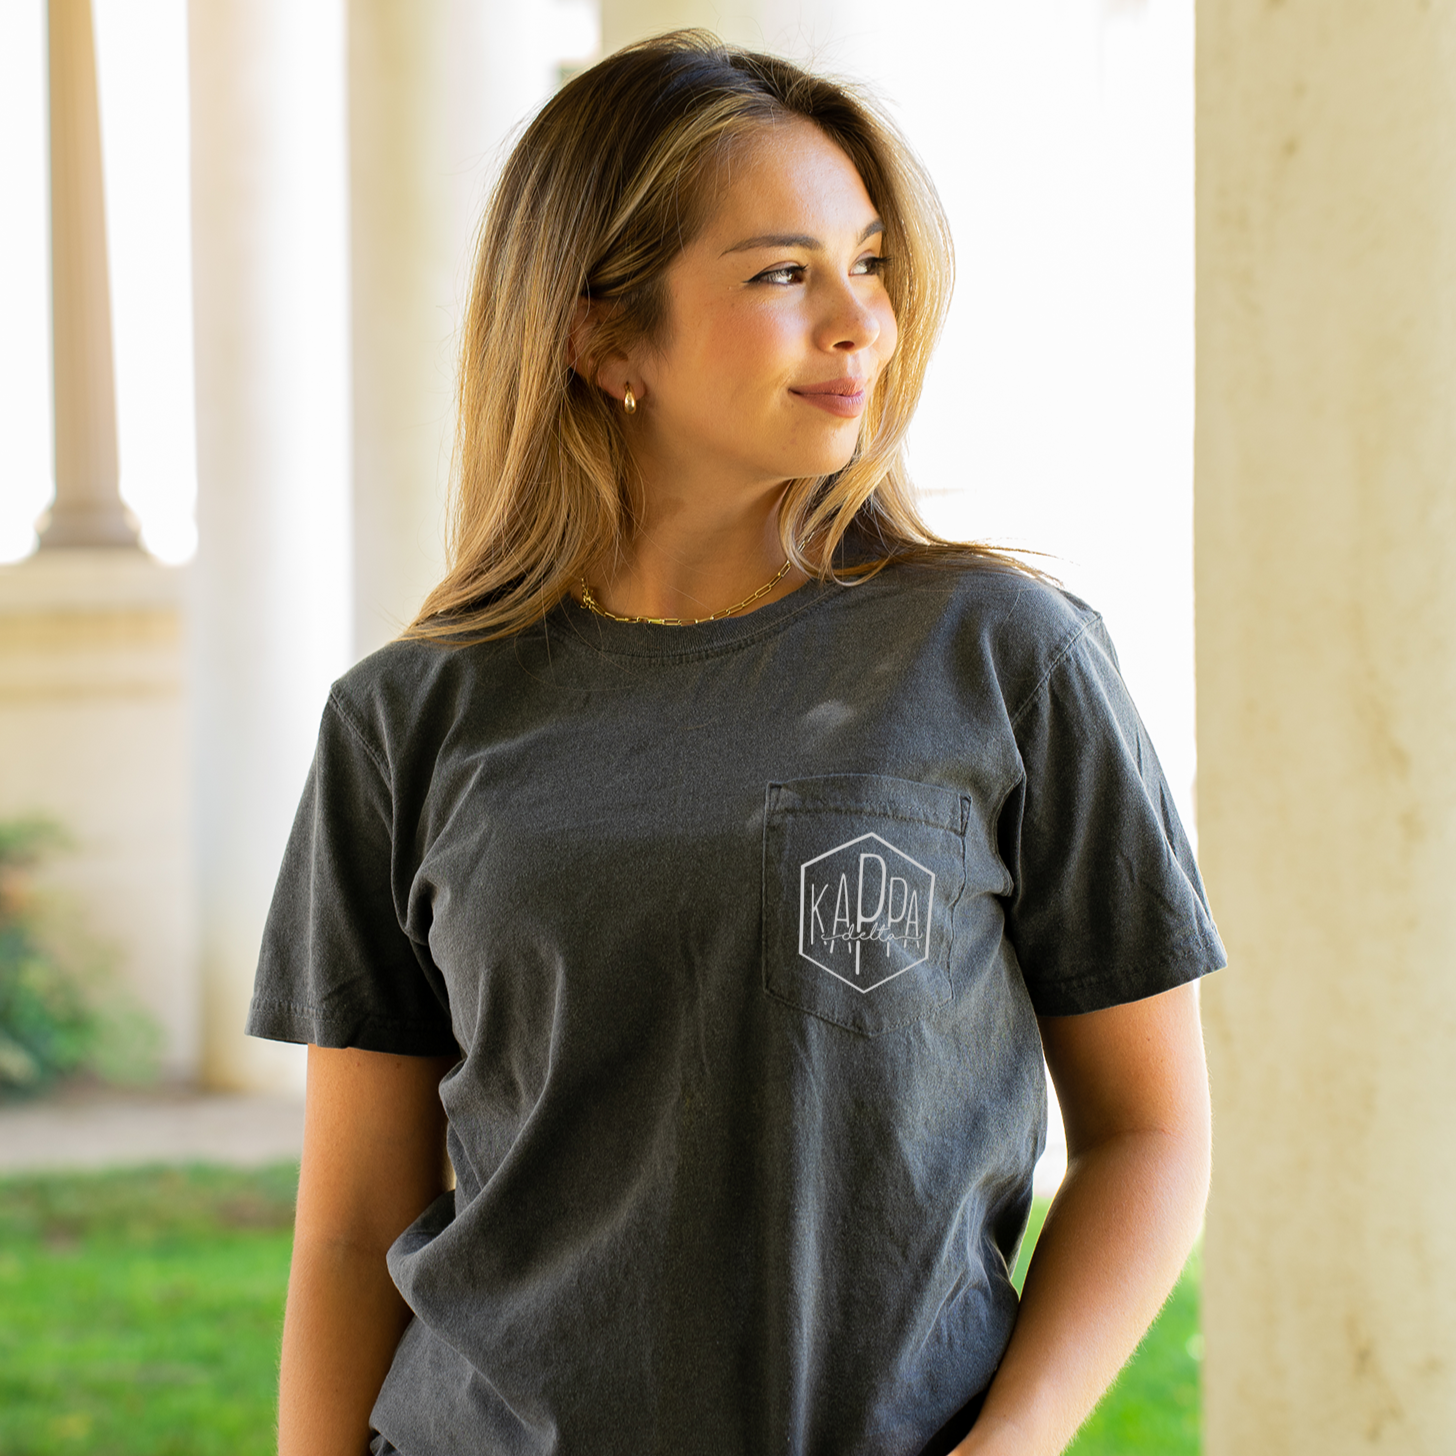 Kappa Delta Hexagon T-Shirt - Grey - Go Greek Chic